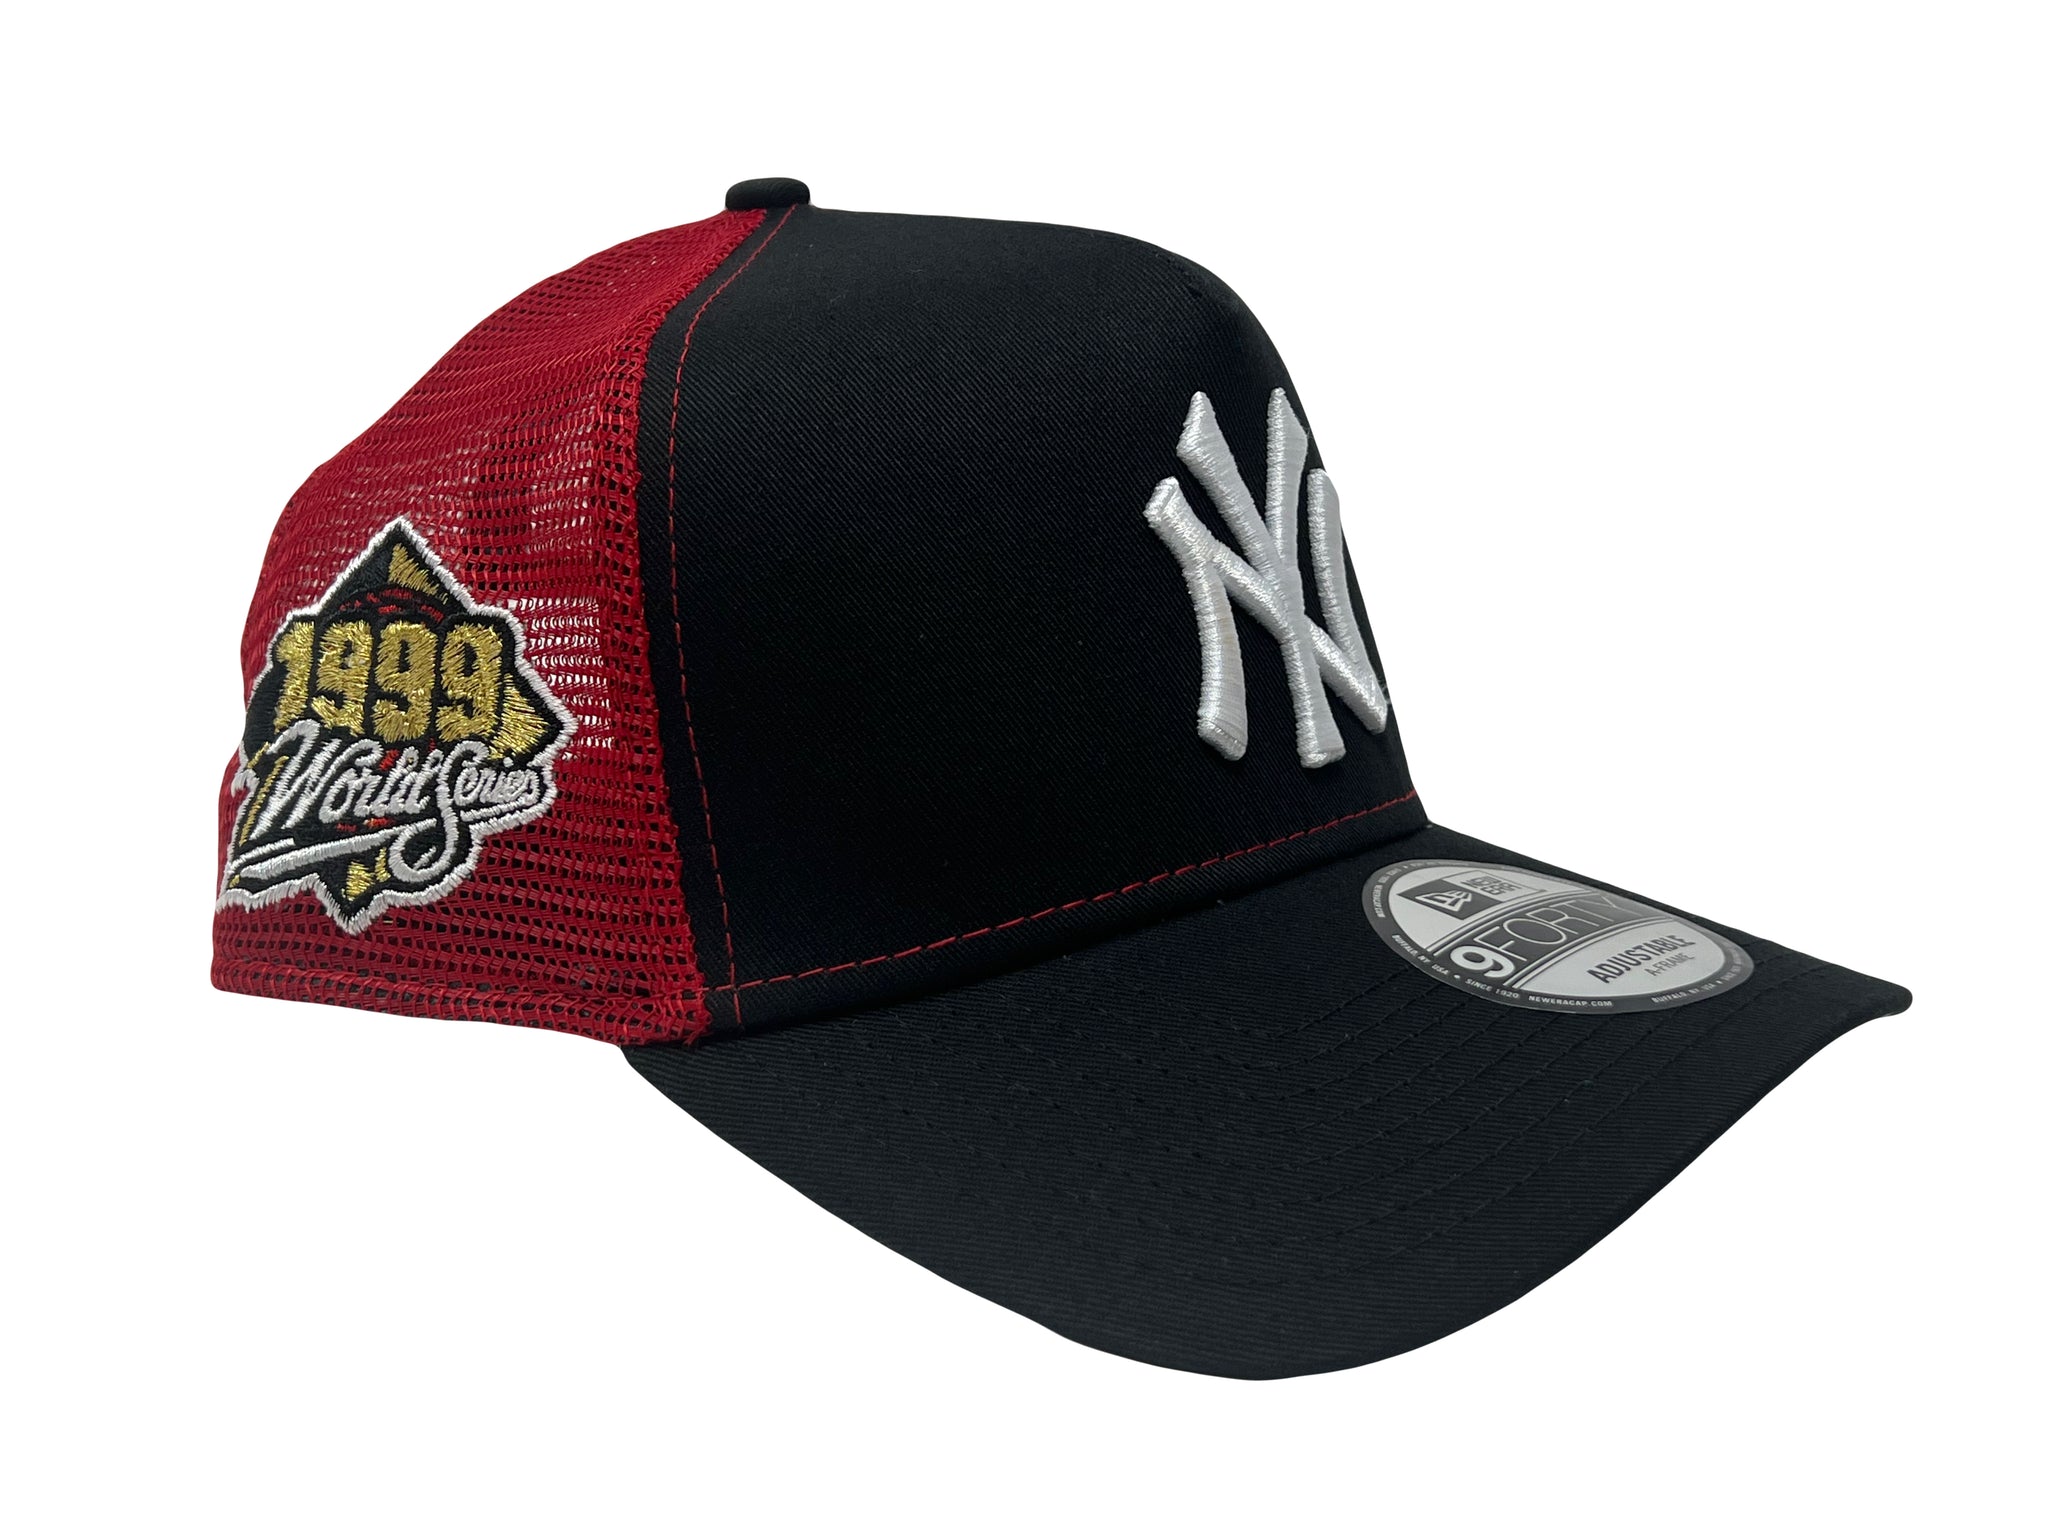 Lids New York Knicks New Era Stripes 9FORTY Trucker Snapback Hat